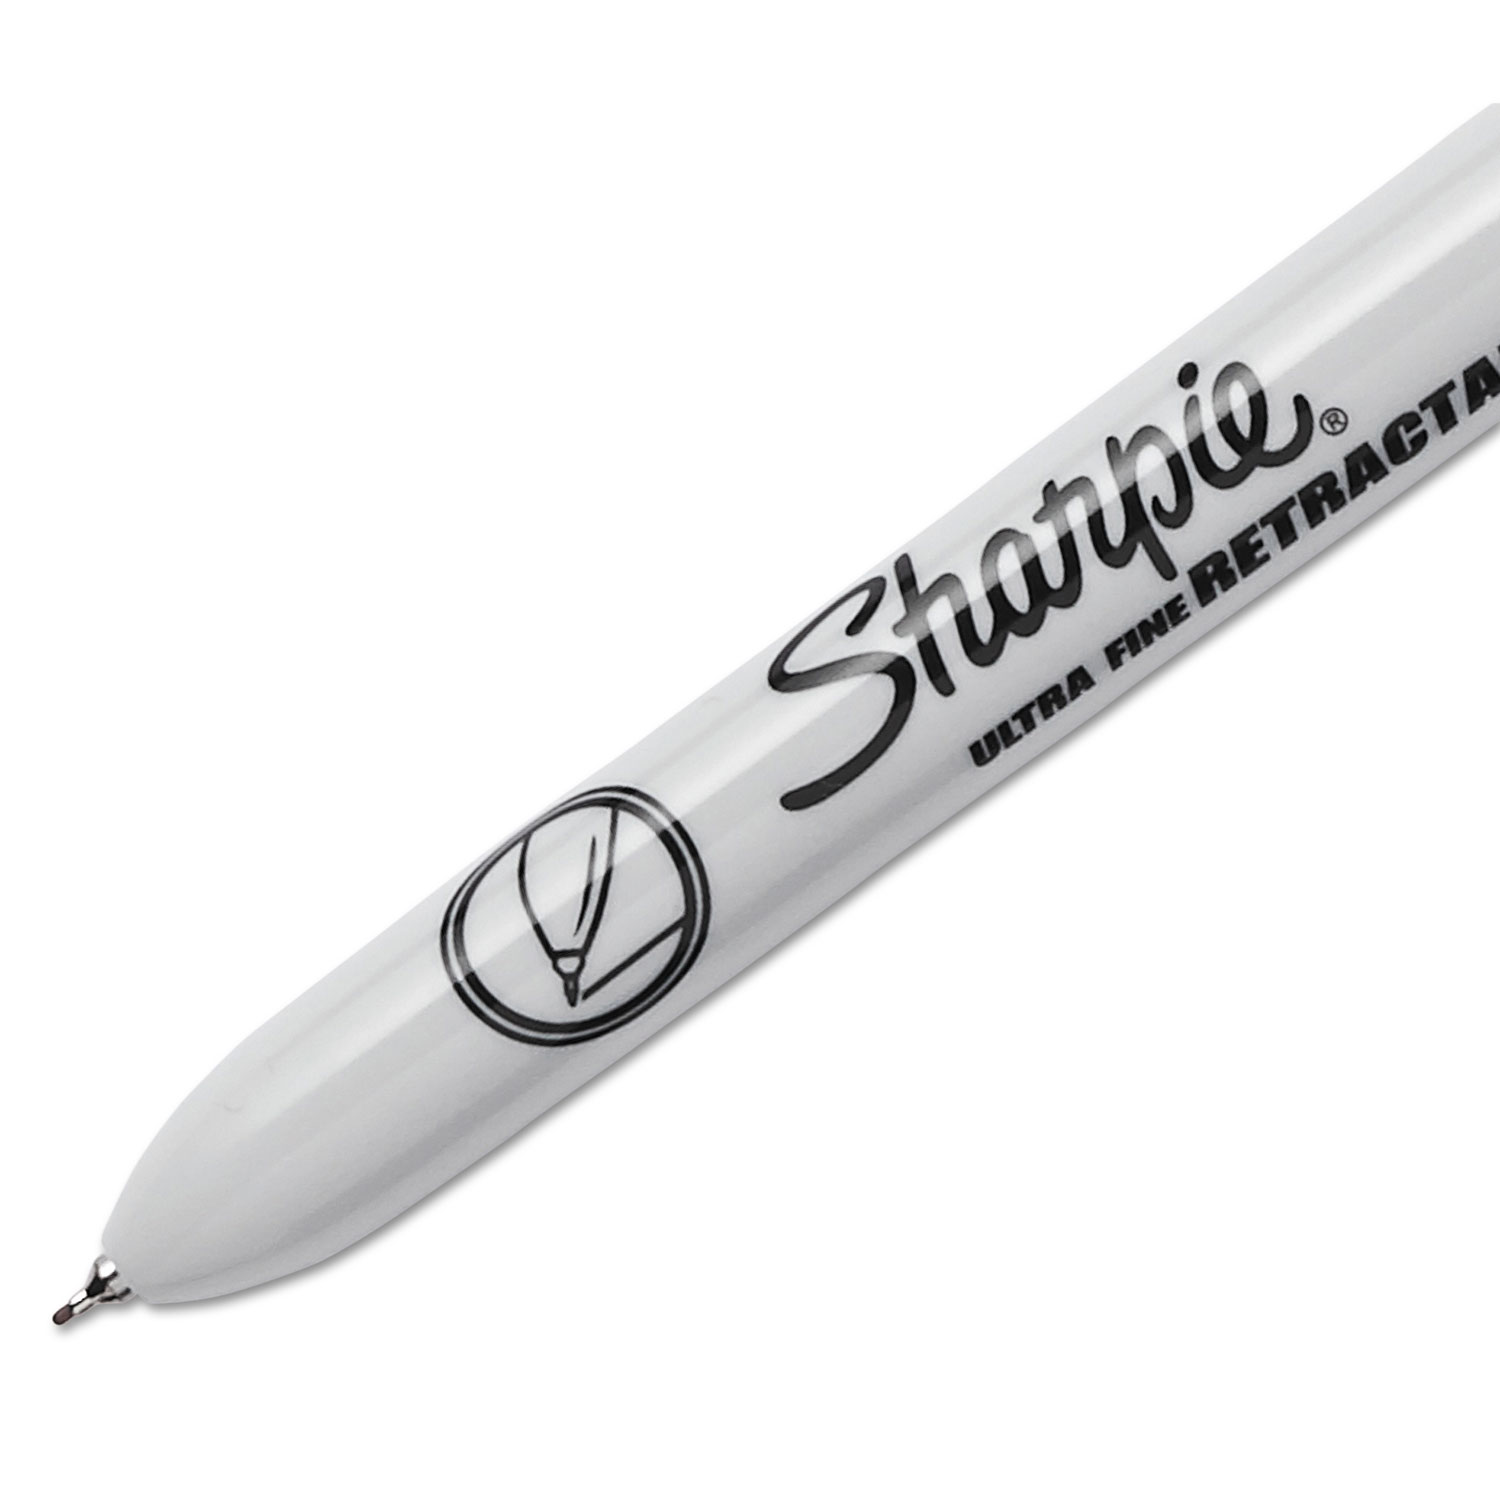 Retractable Permanent Marker by Sharpie® SAN32702